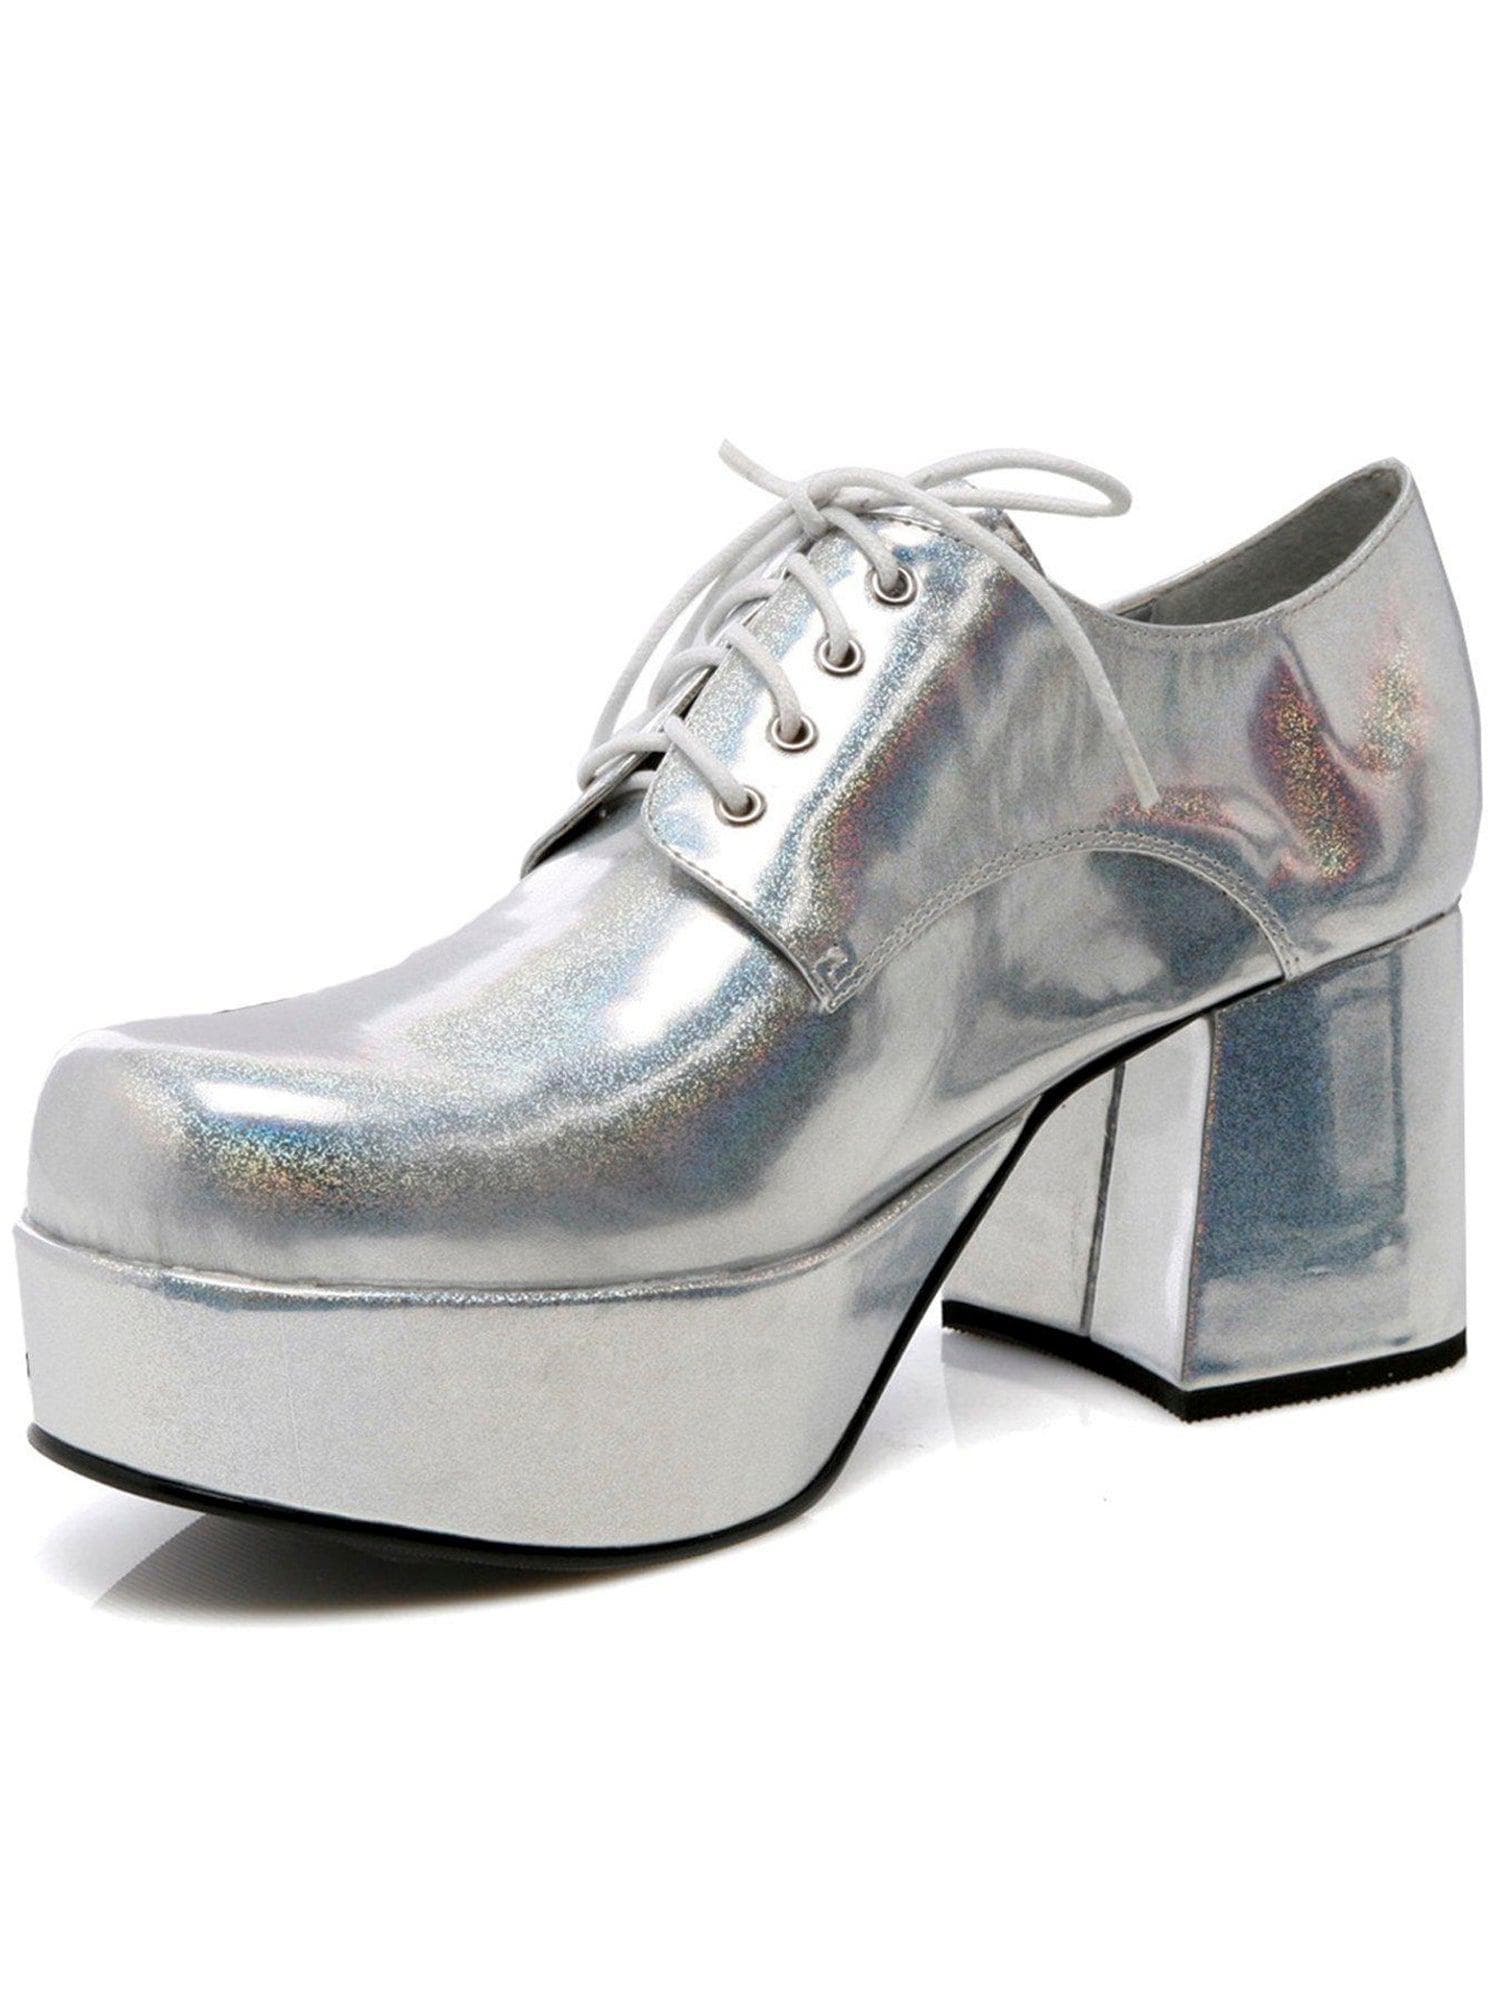 Adult Silver 70s Platform Heeled Shoes - costumes.com